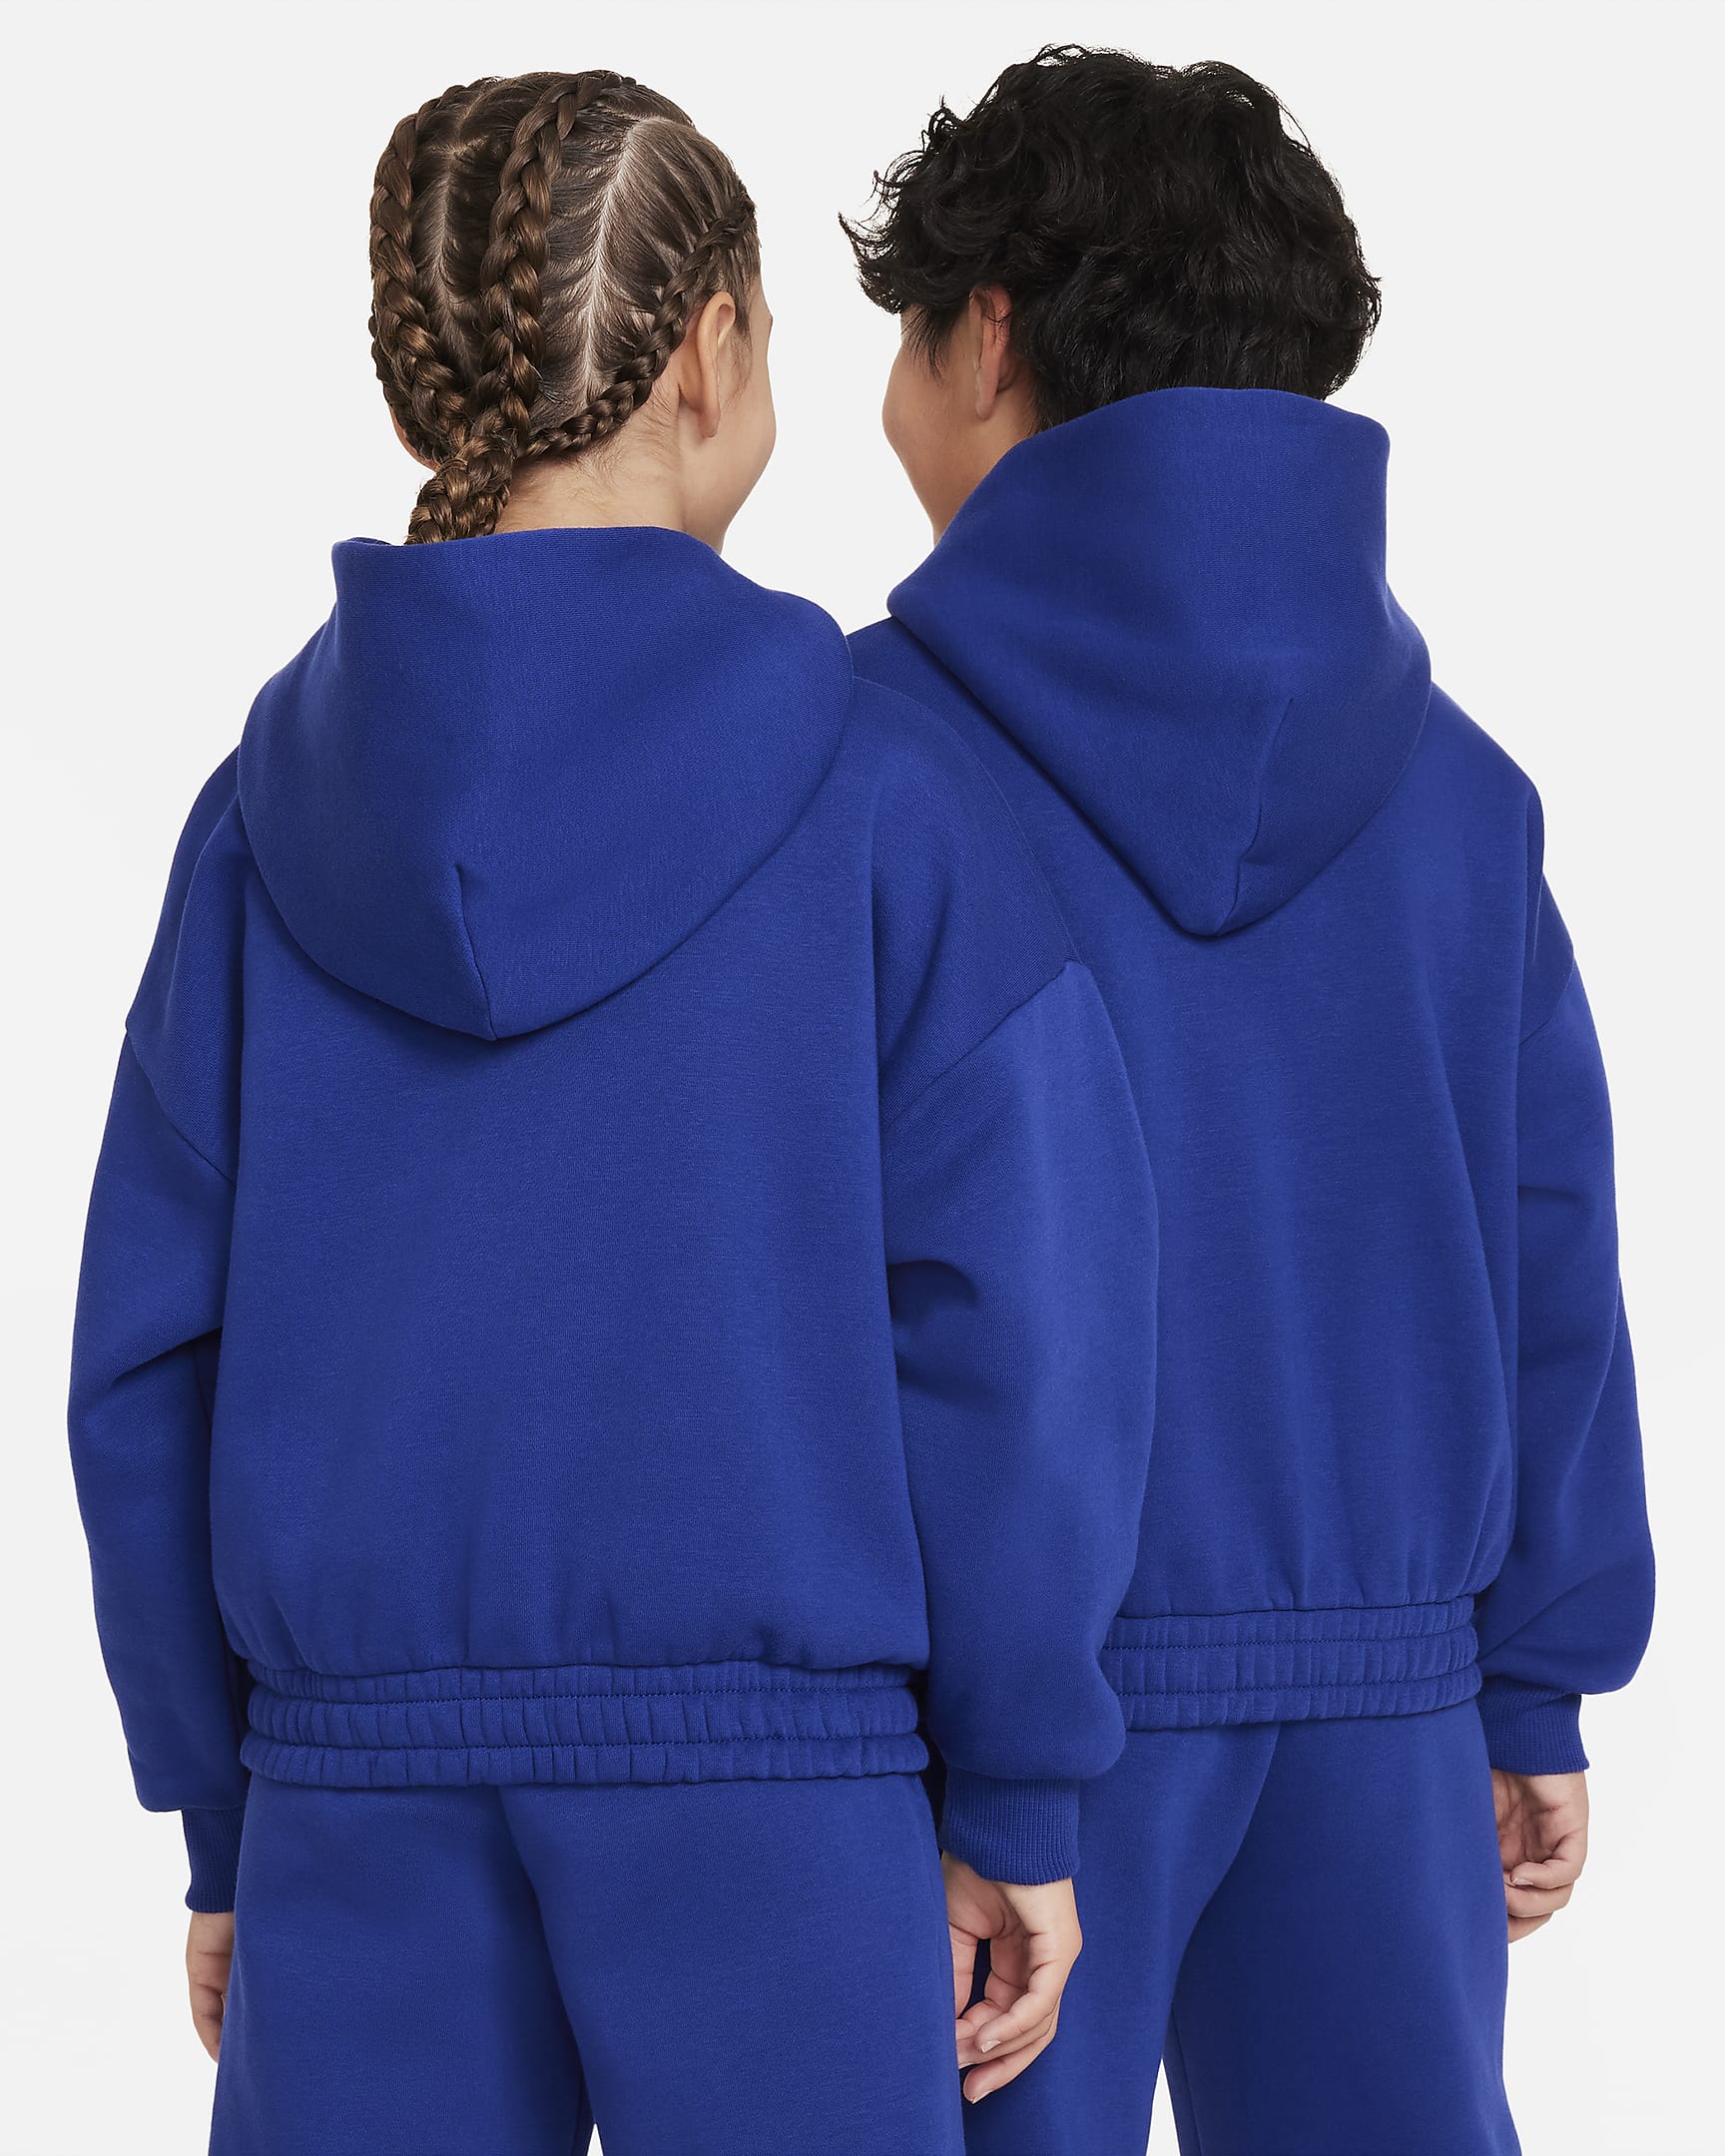 Nike Culture of Basketball Older Kids' Pullover Fleece Hoodie - Deep Royal Blue/Vapour Green